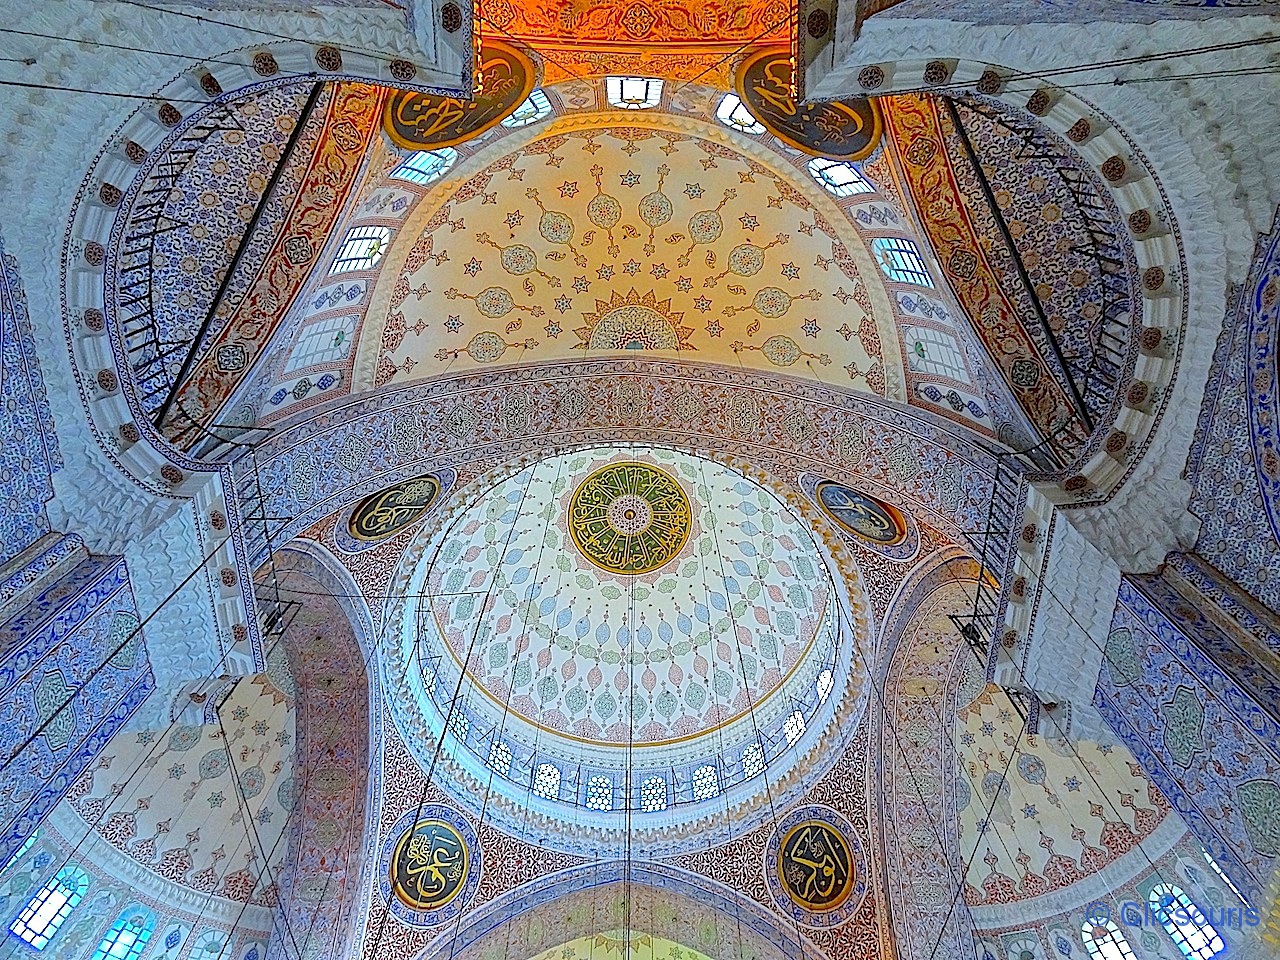 Istanbul mosquée neuve